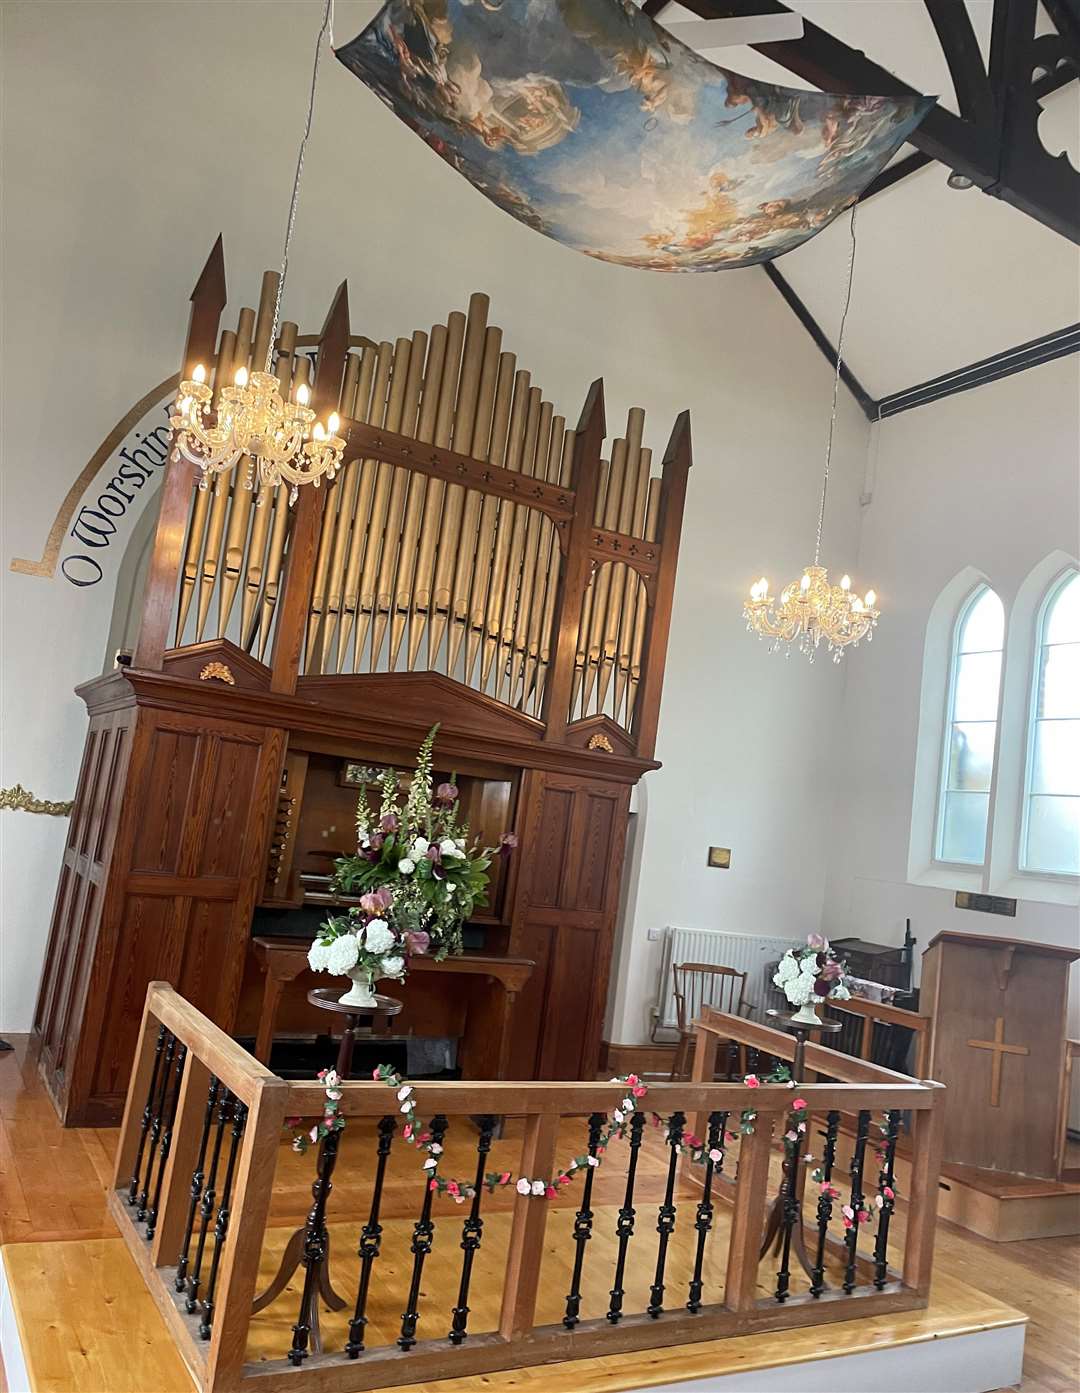 The new organ